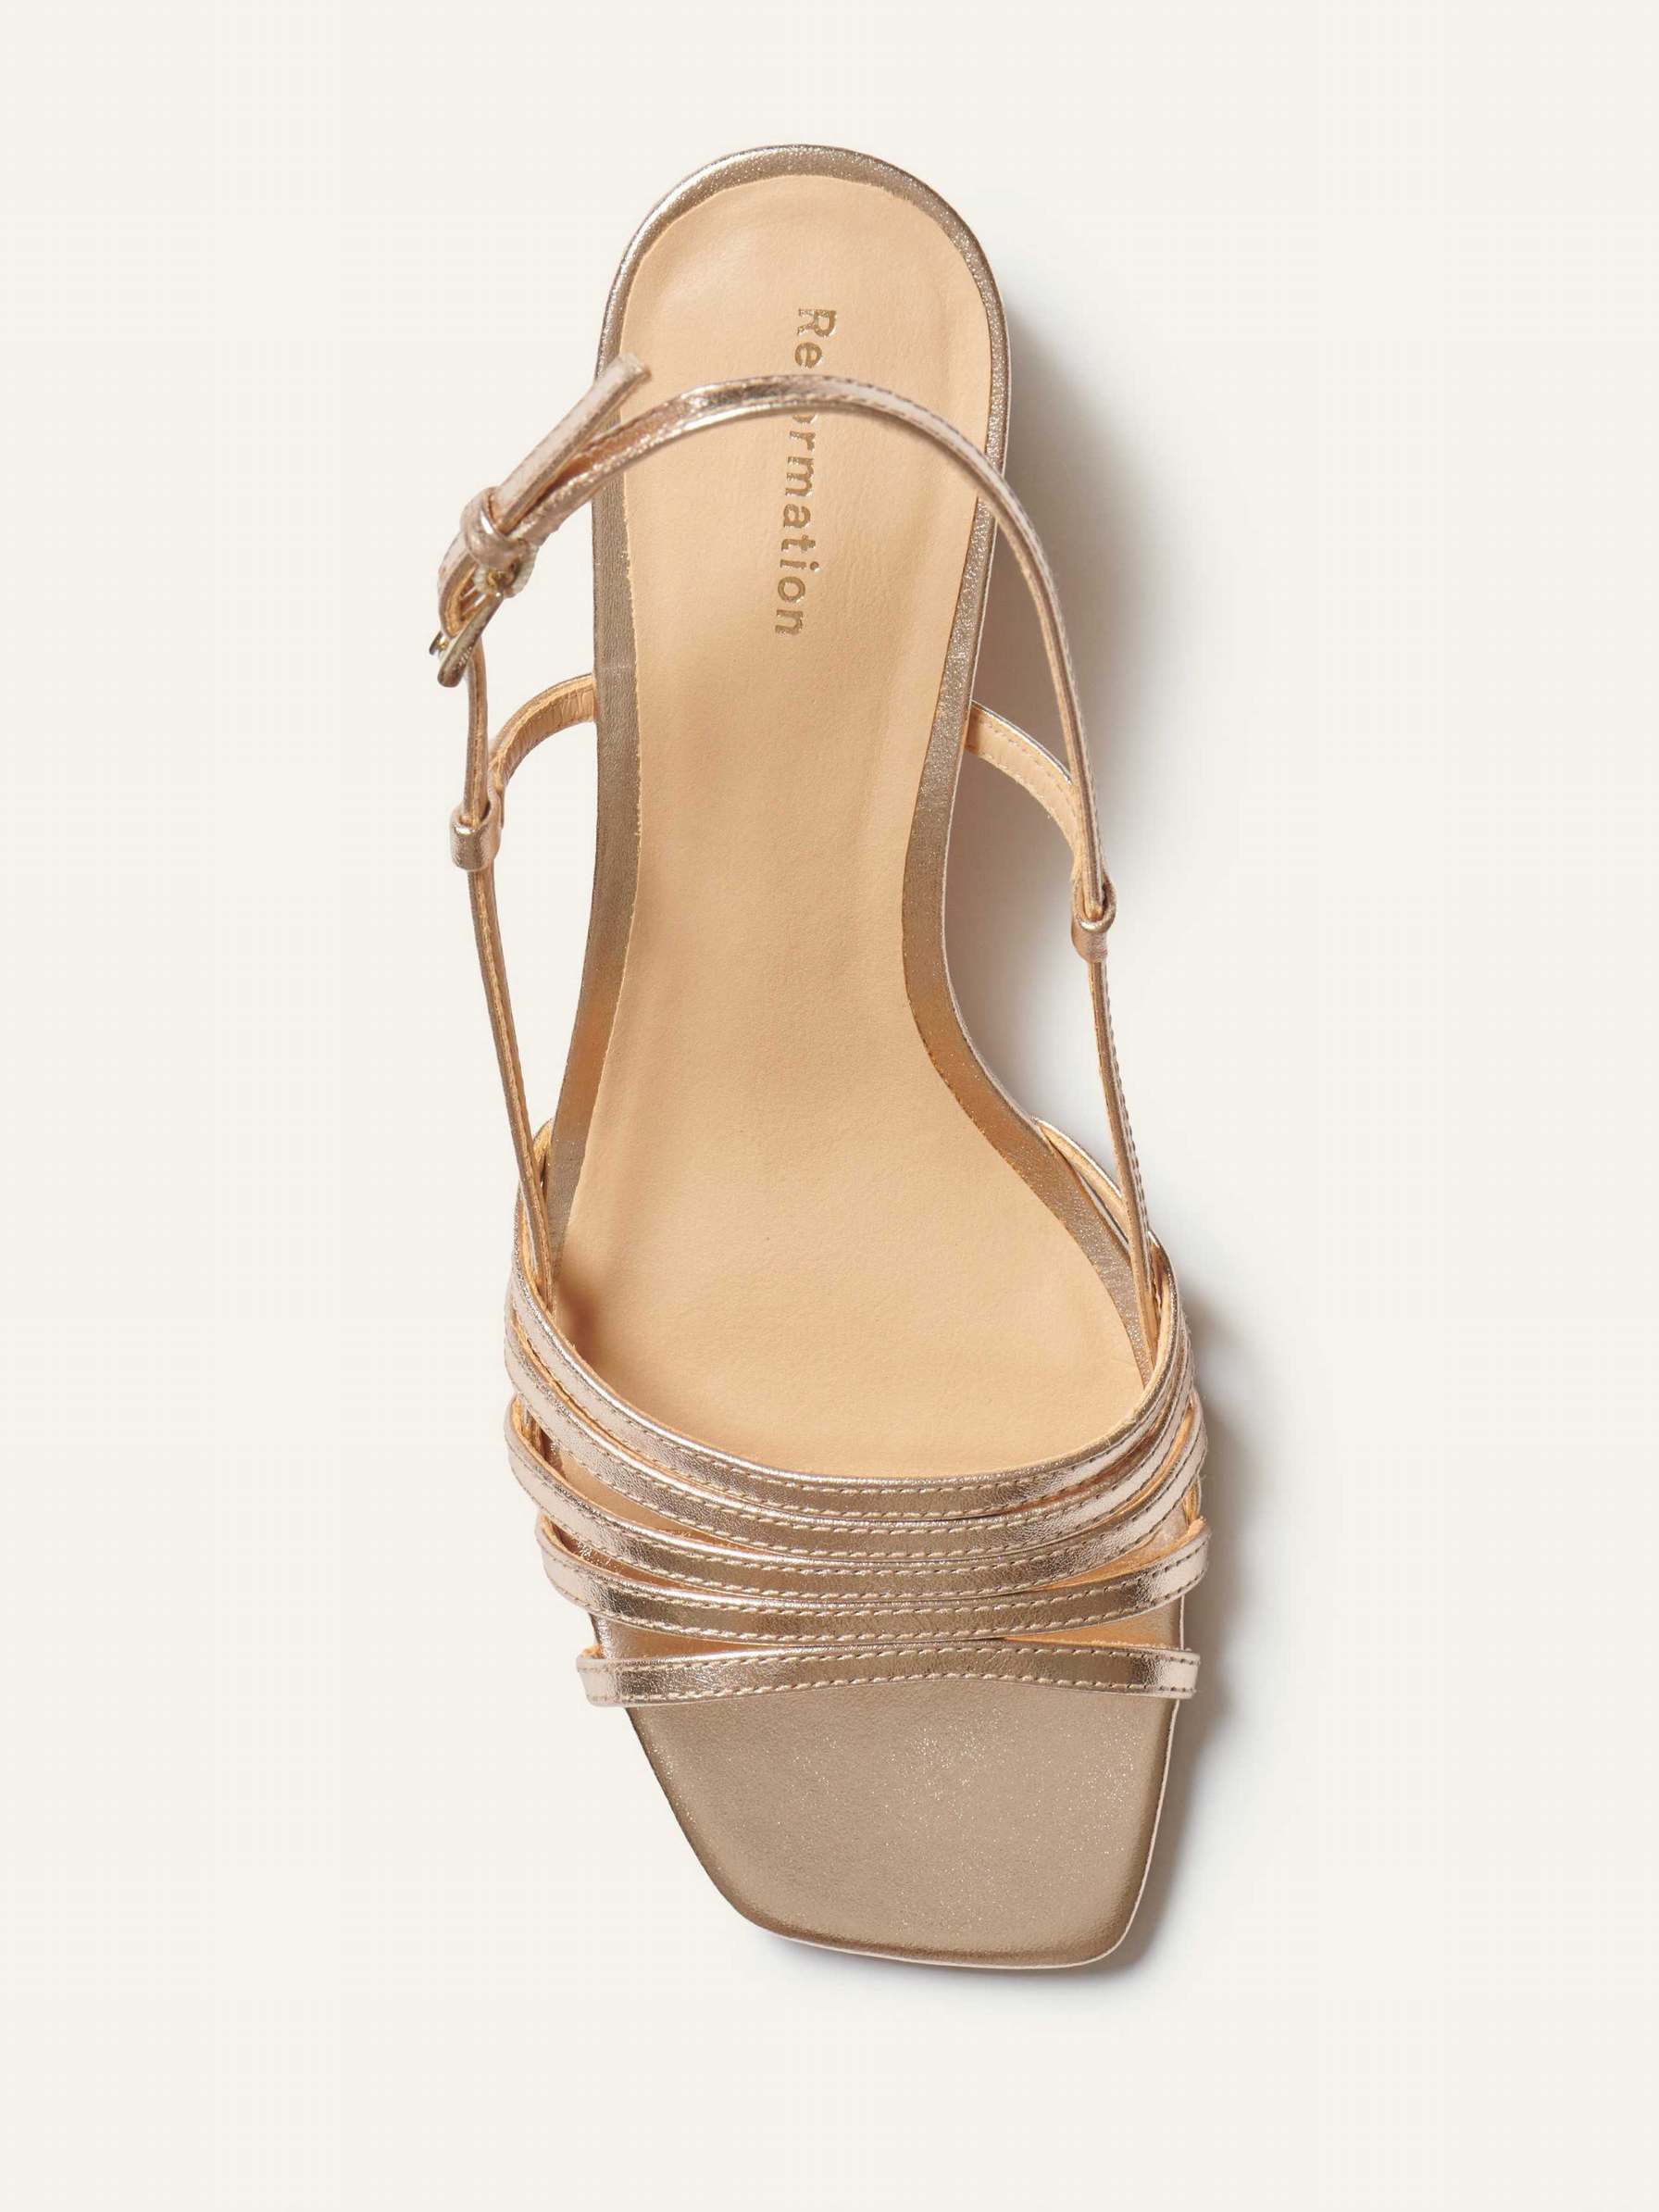 Reformation Eleonora Sling Women's Sandals Gold | OUTLET-0521468